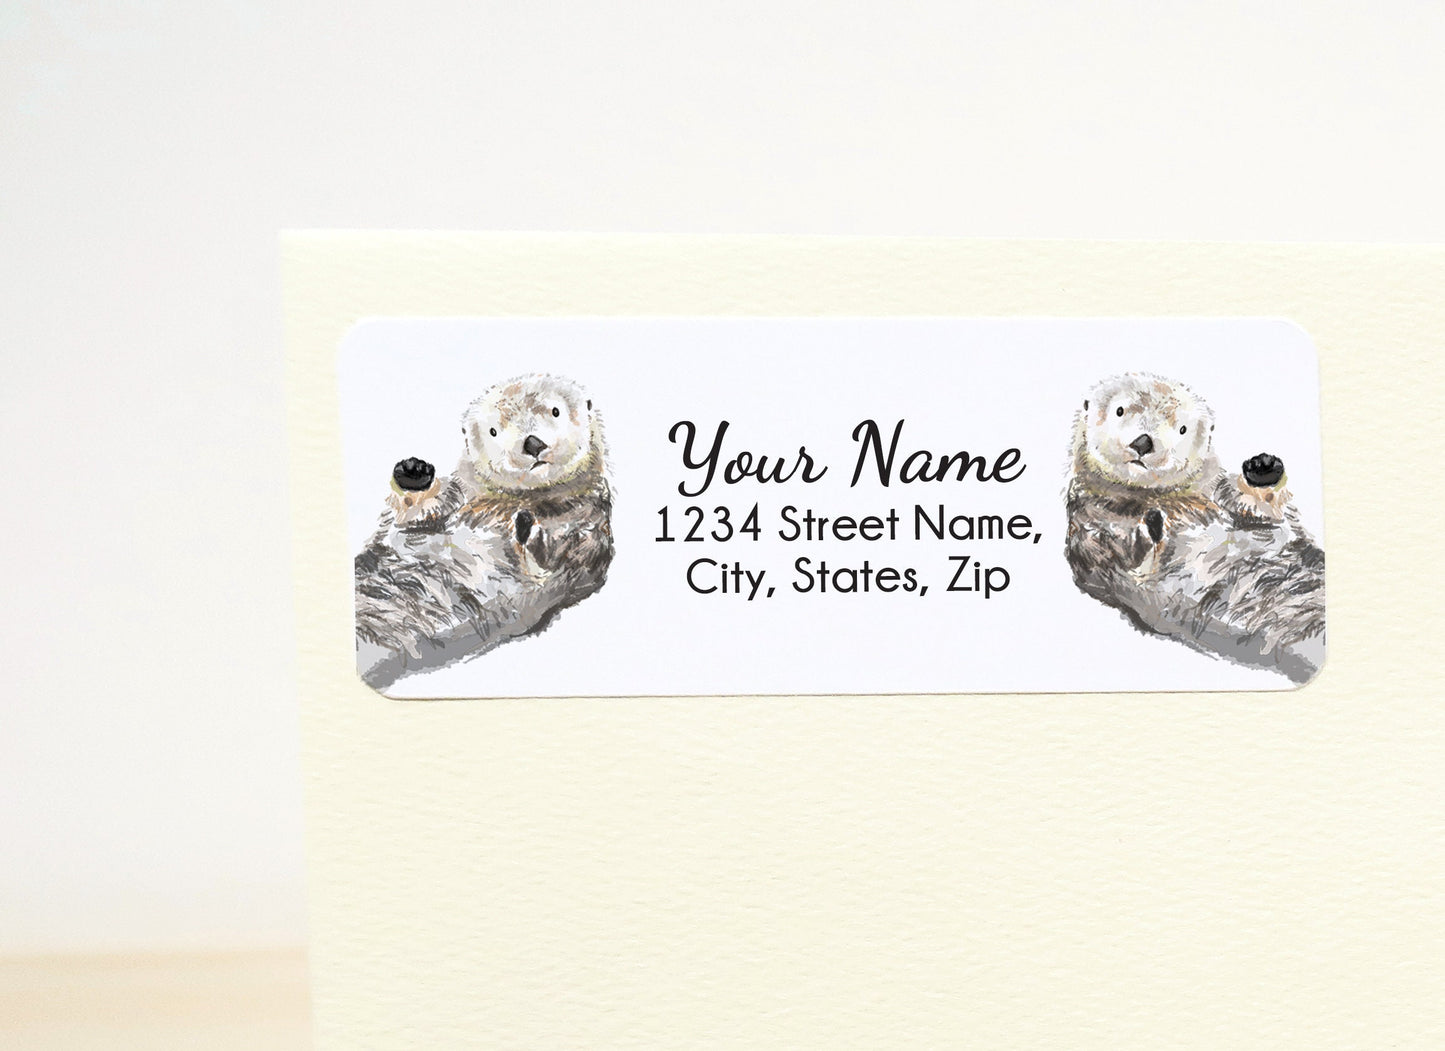 Sea Otter Personalized Address Label